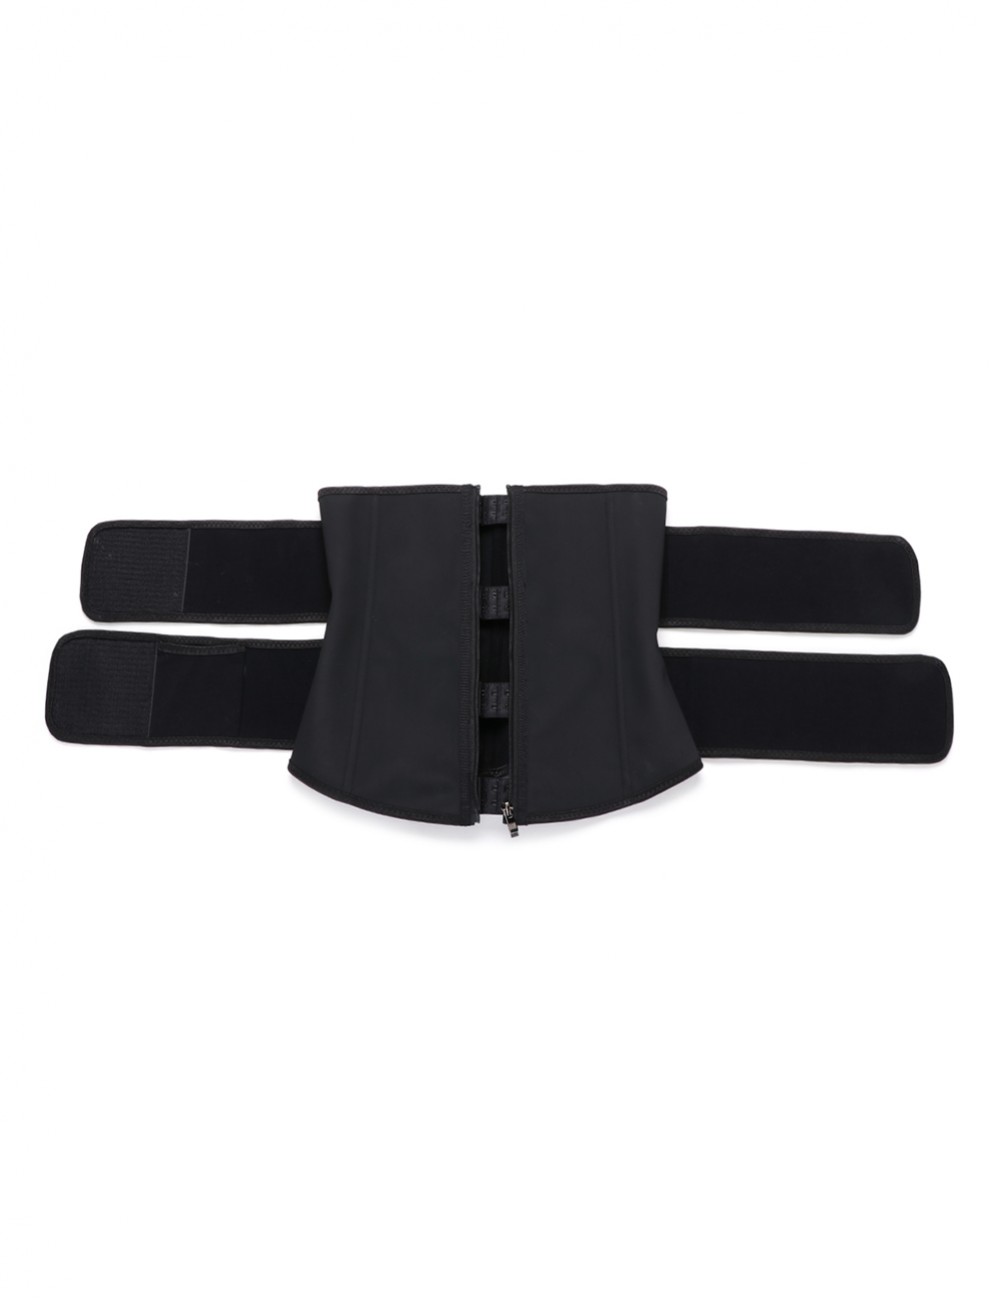 Black Plus Size Latex Double Belt Waist Trainer 7 Steel Bones Compression